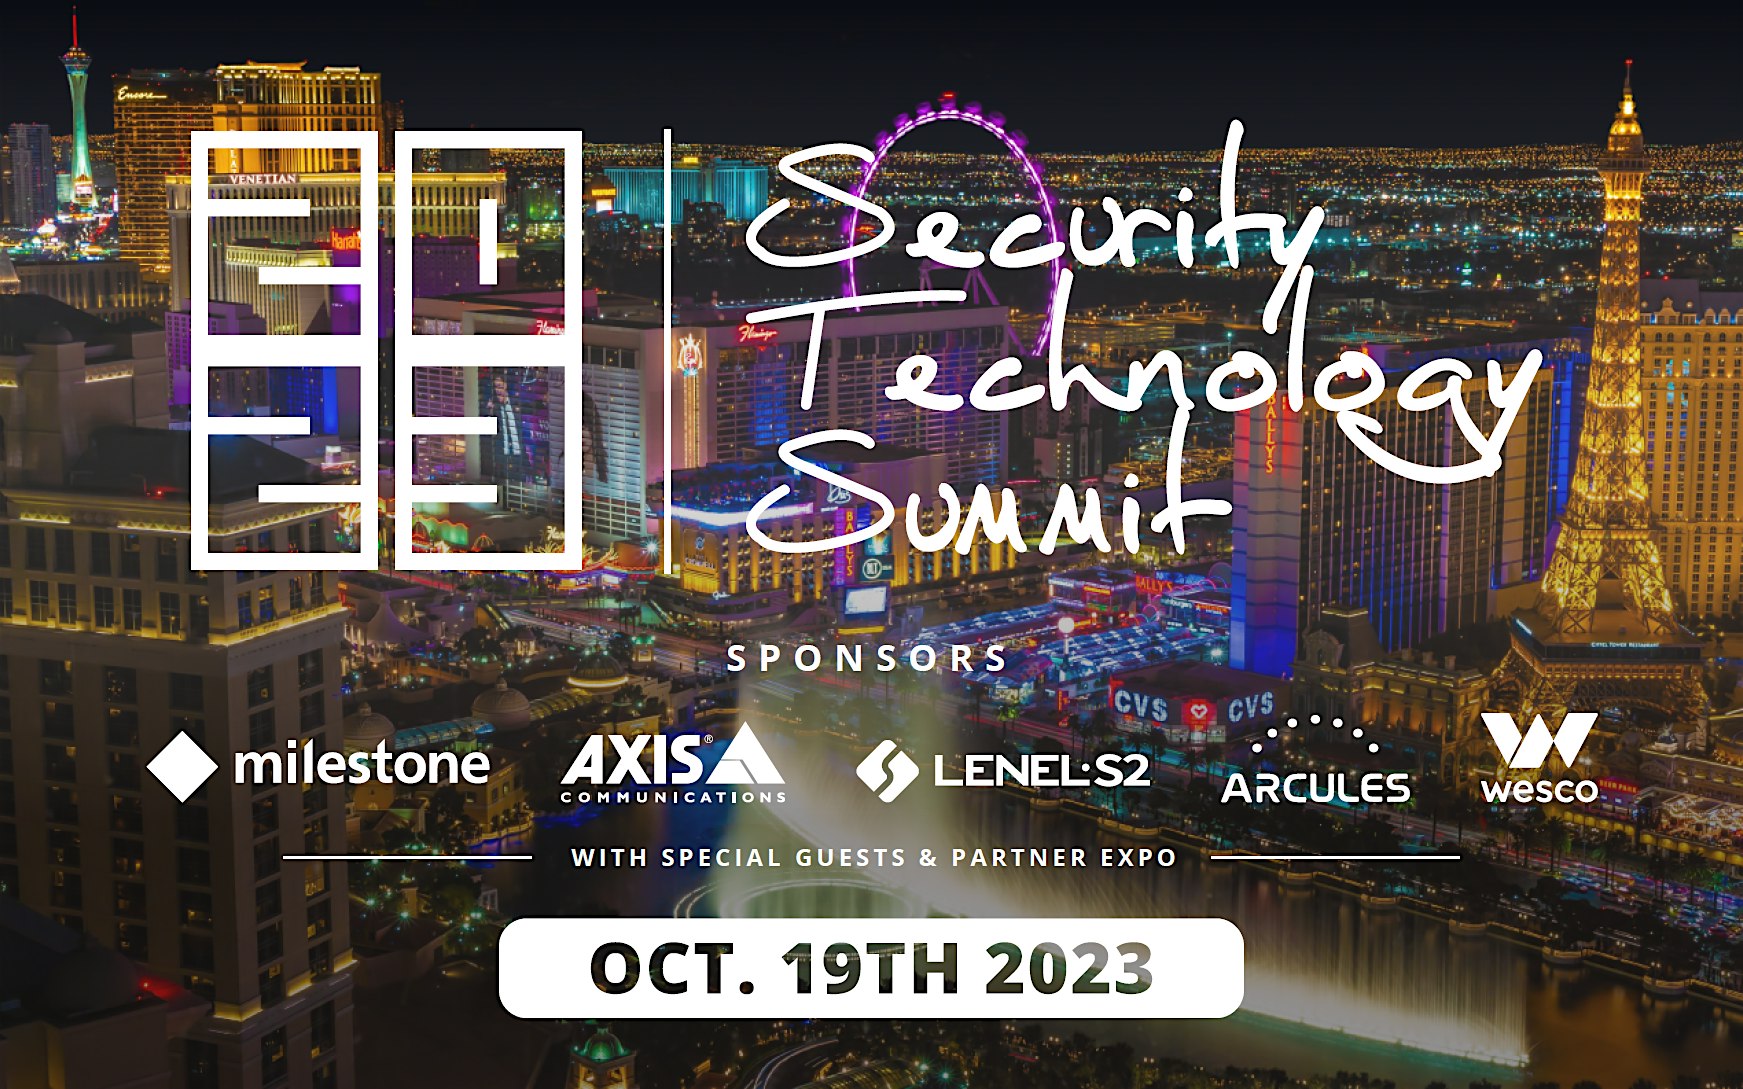 LAS – 2023 Security Technology Summit